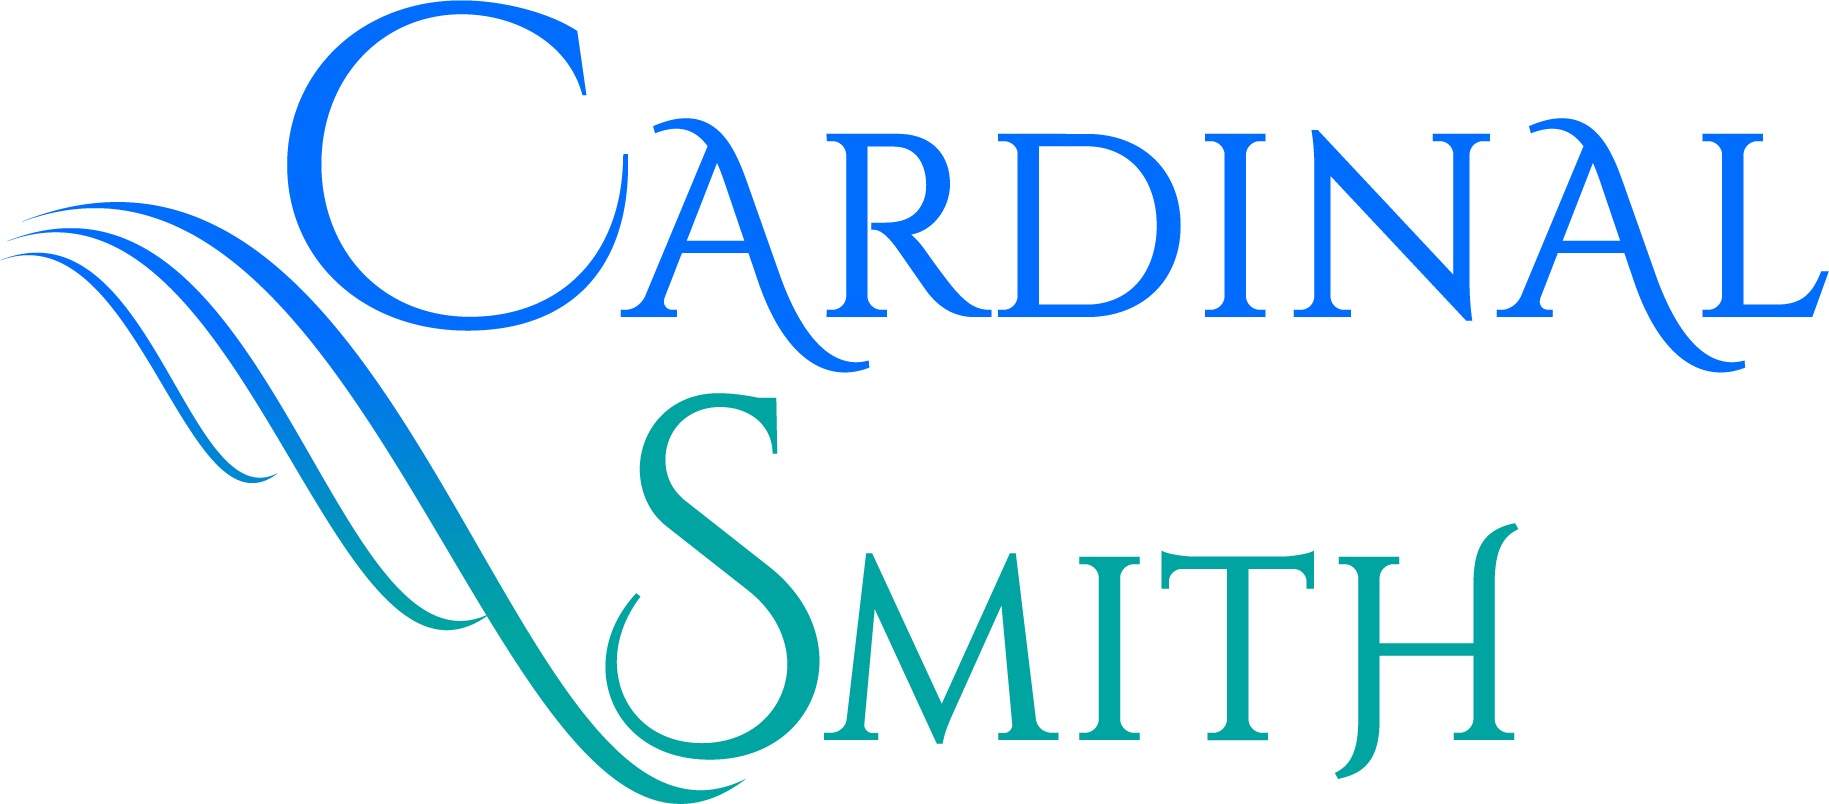 Cardinal Smith